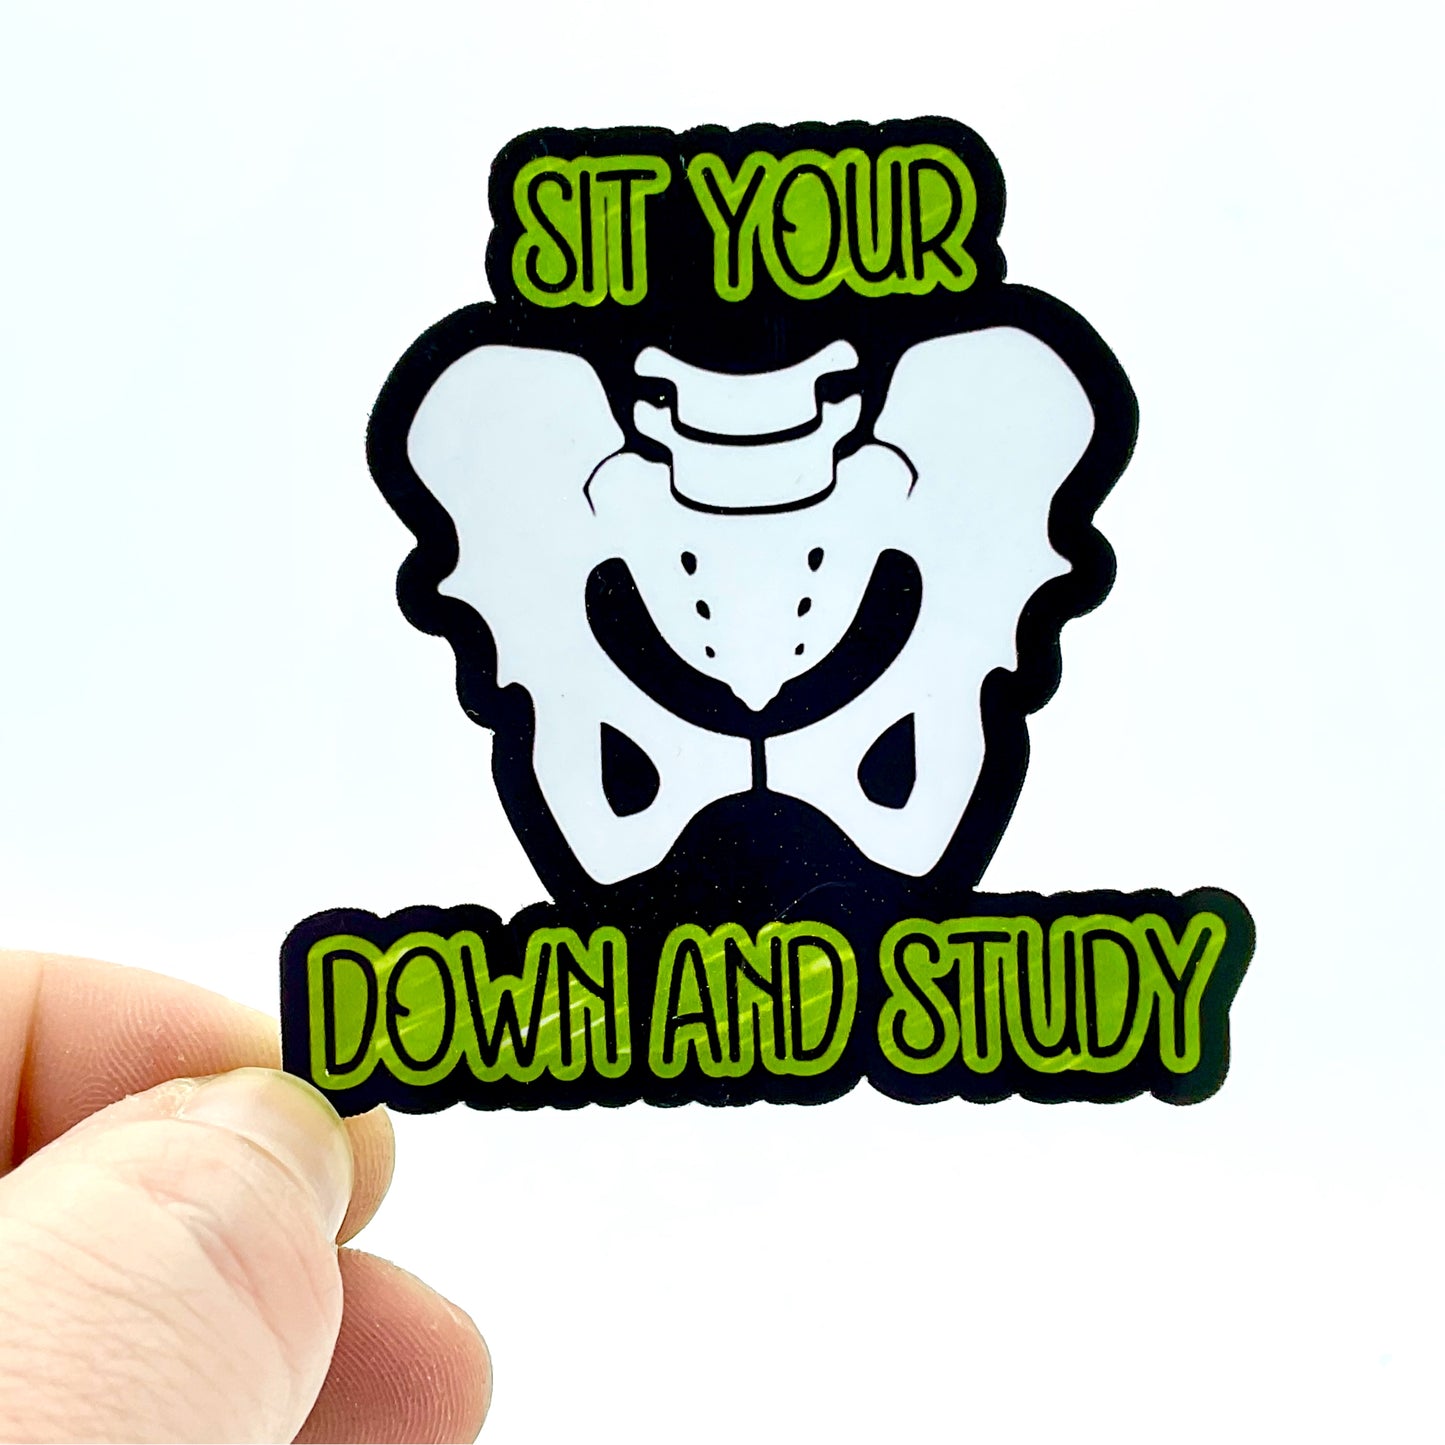 Sit Your (Pelvis) Down and Study (Black) Medical, Nursing, PT Student Waterproof Sticker